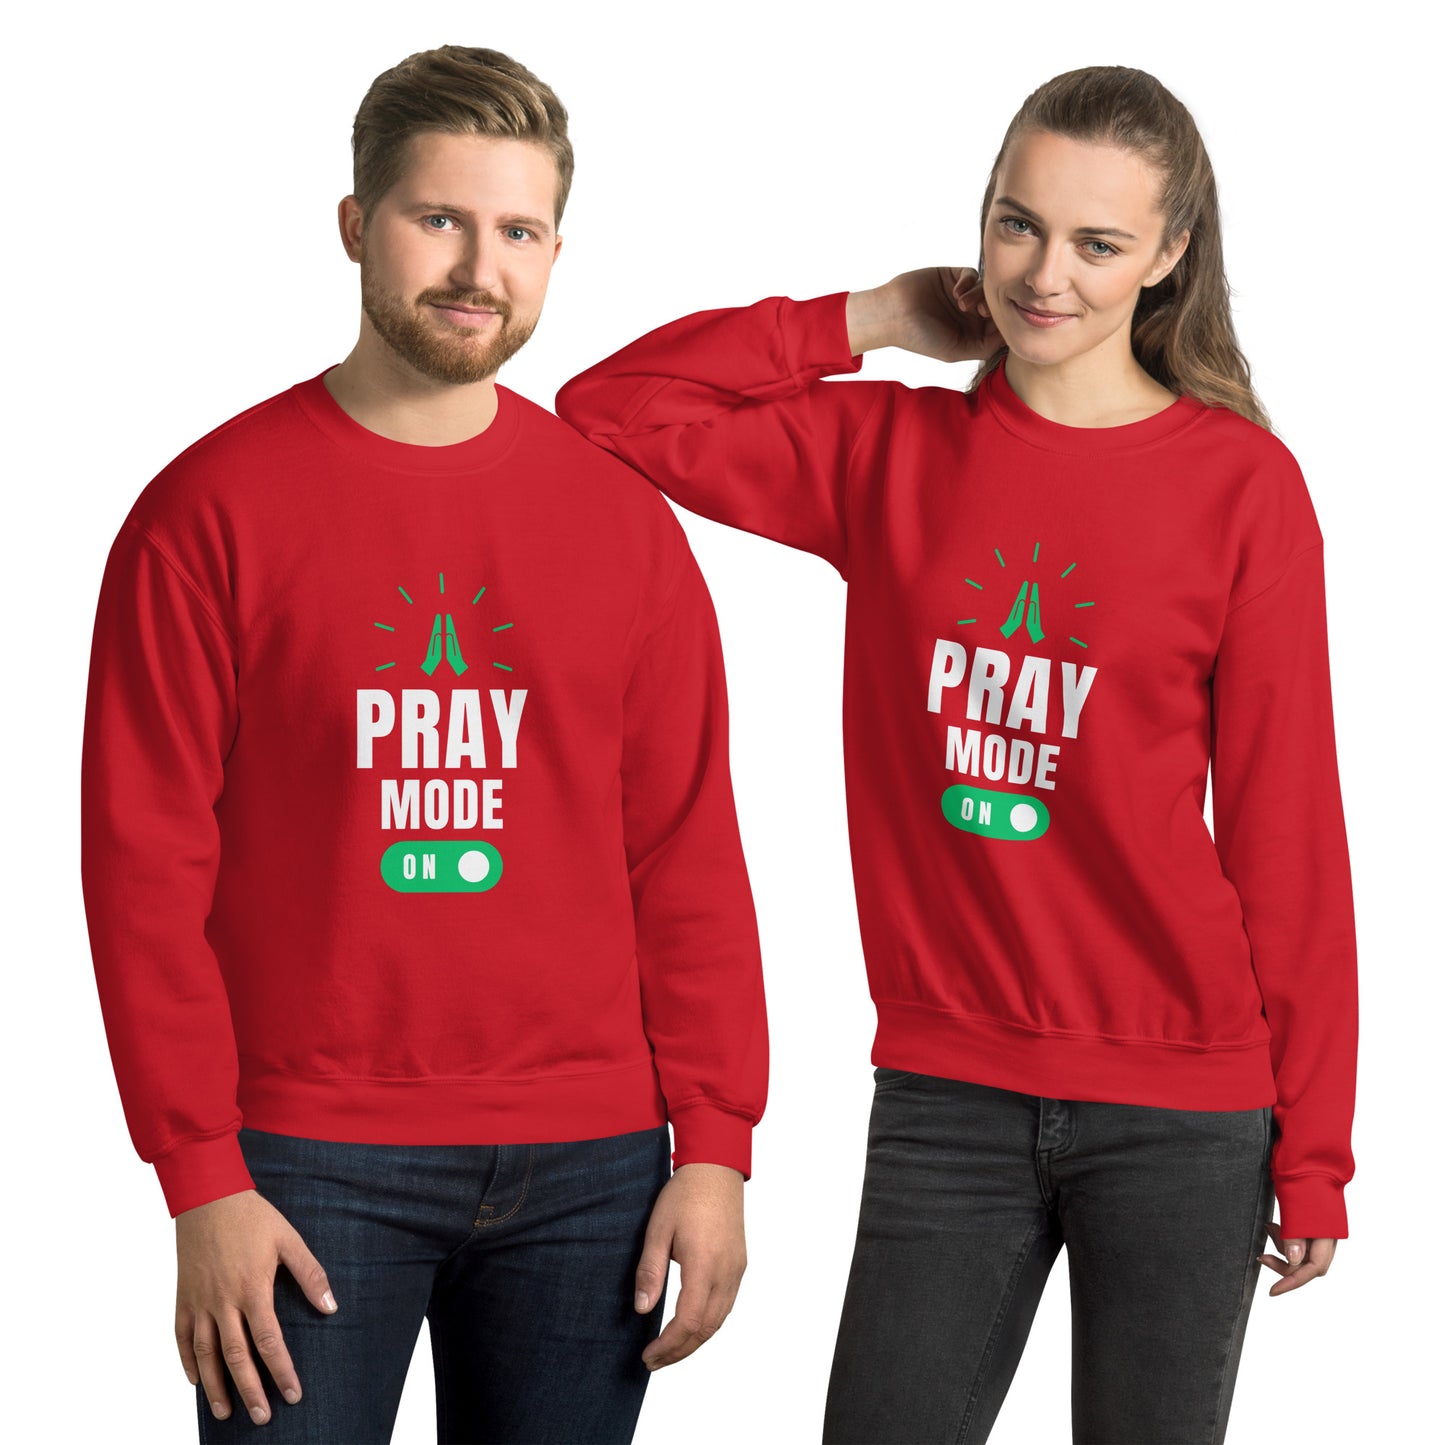 Pray Mode On - Unisex Sweatshirt